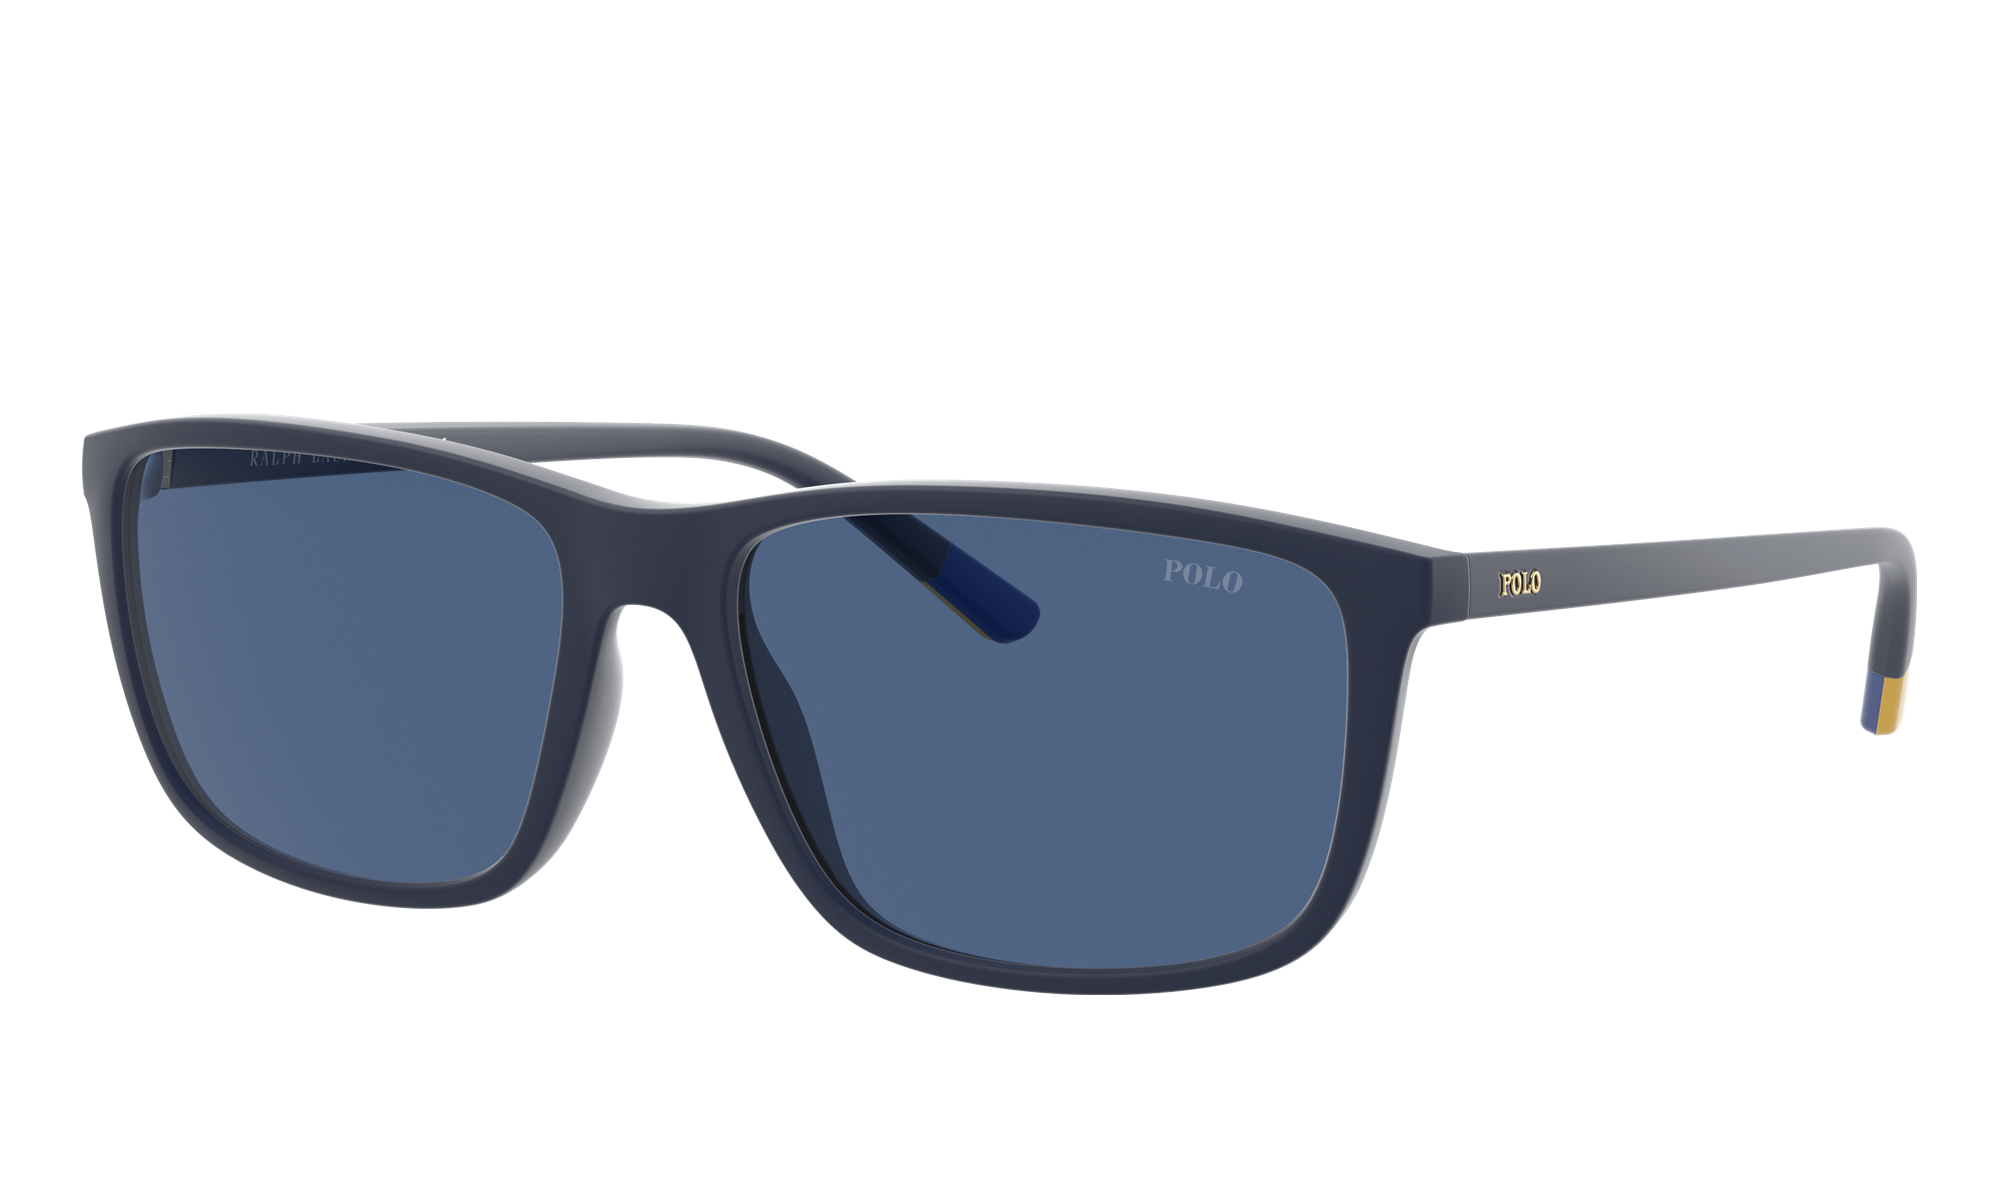 Sunglasses Polo ralph lauren PH4181 5007/87 51-19 Shiny striped havana in  stock | Price 94,08 € | Visiofactory